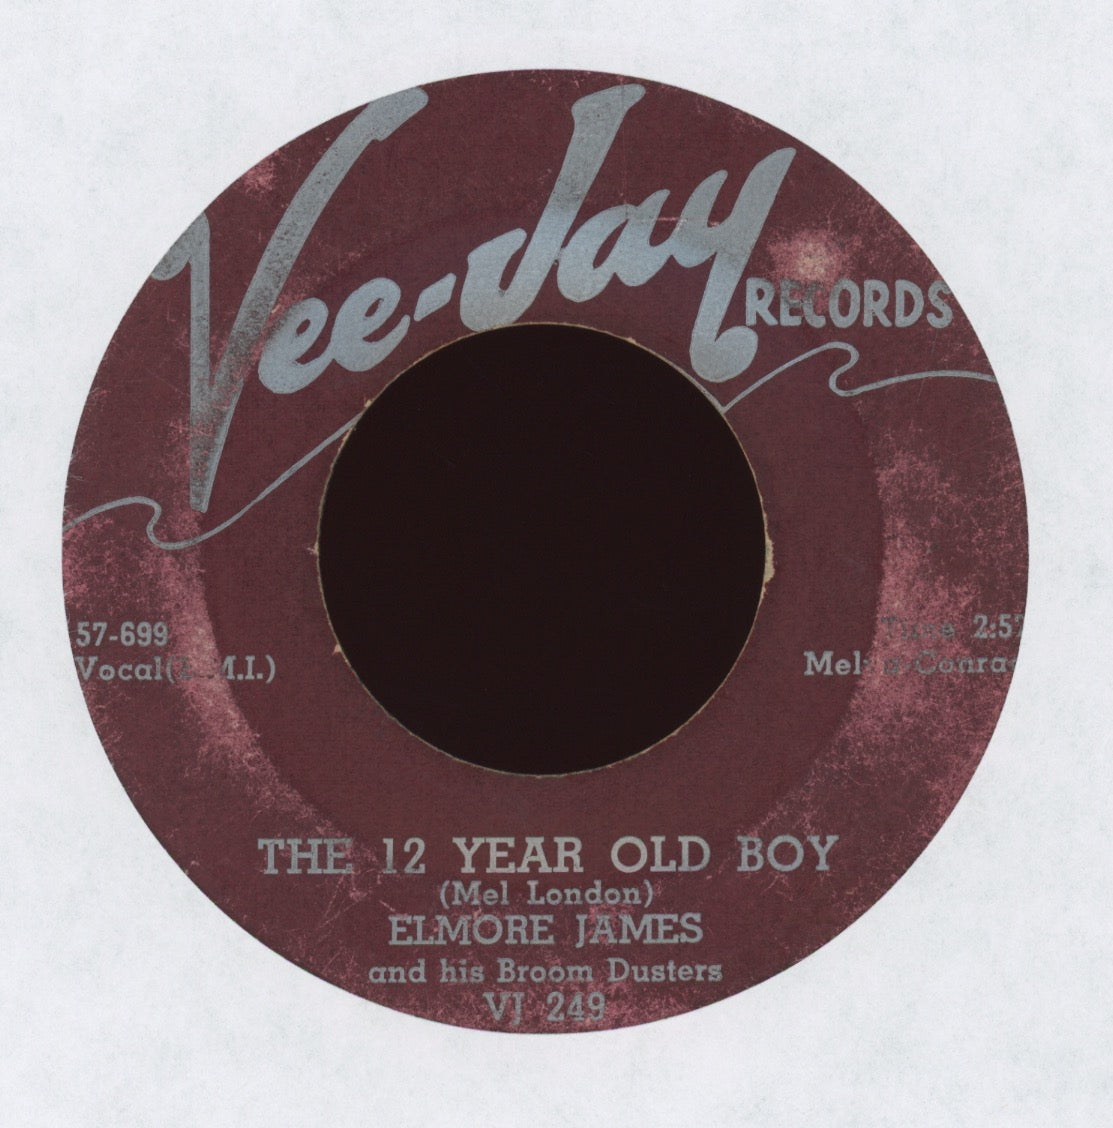 Elmore James & His Broomdusters - The 12 Year Old Boy on Vee Jay